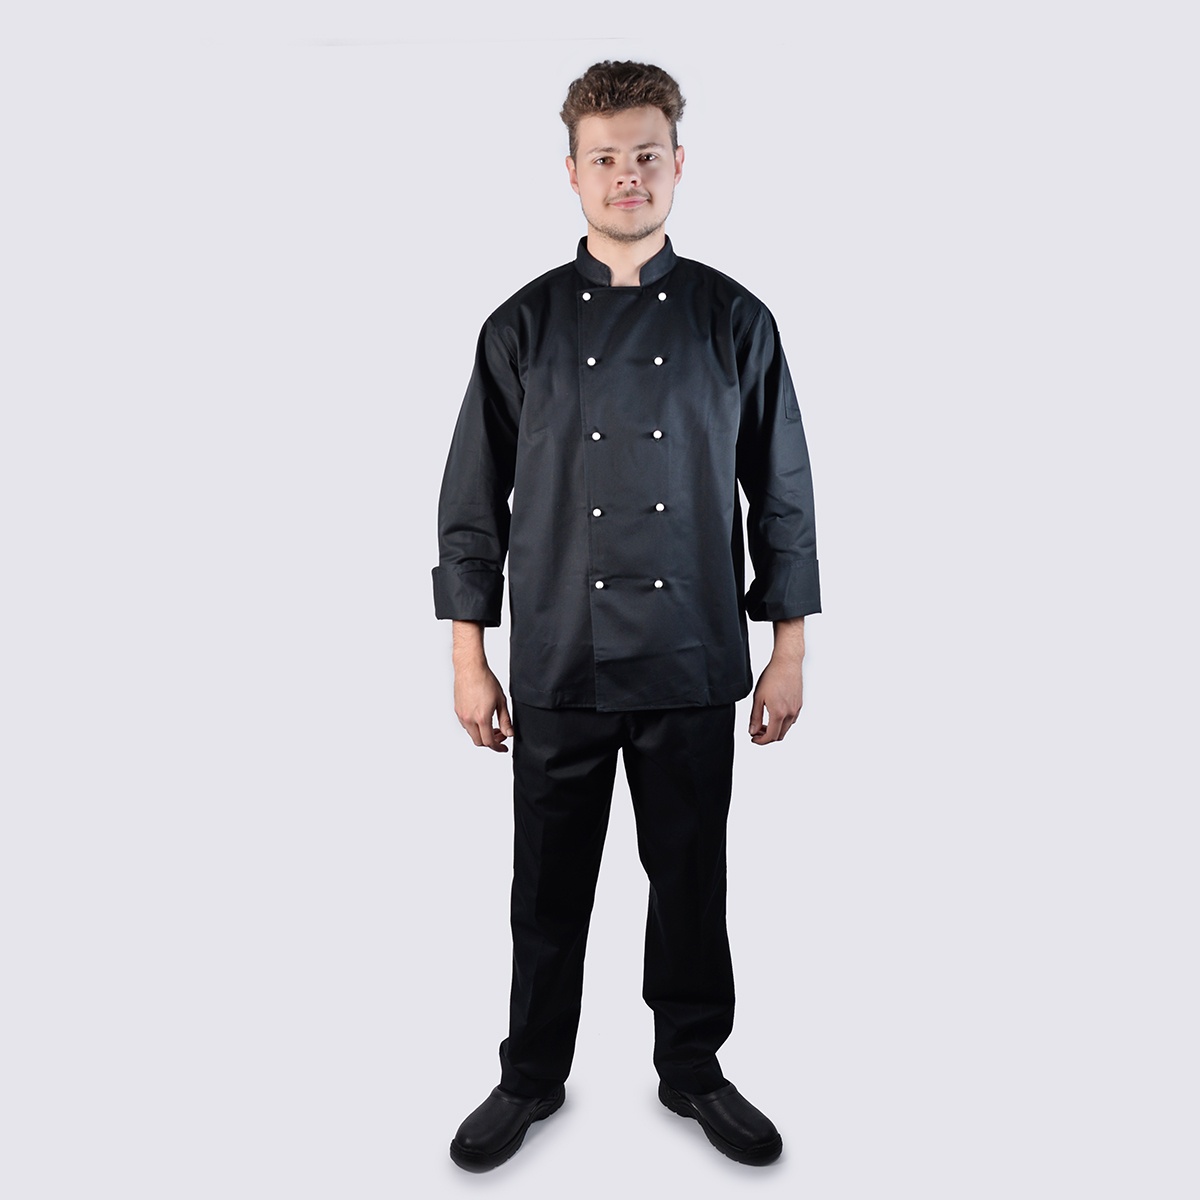 Chef Jacket Black Long Sleeve + Black Pant